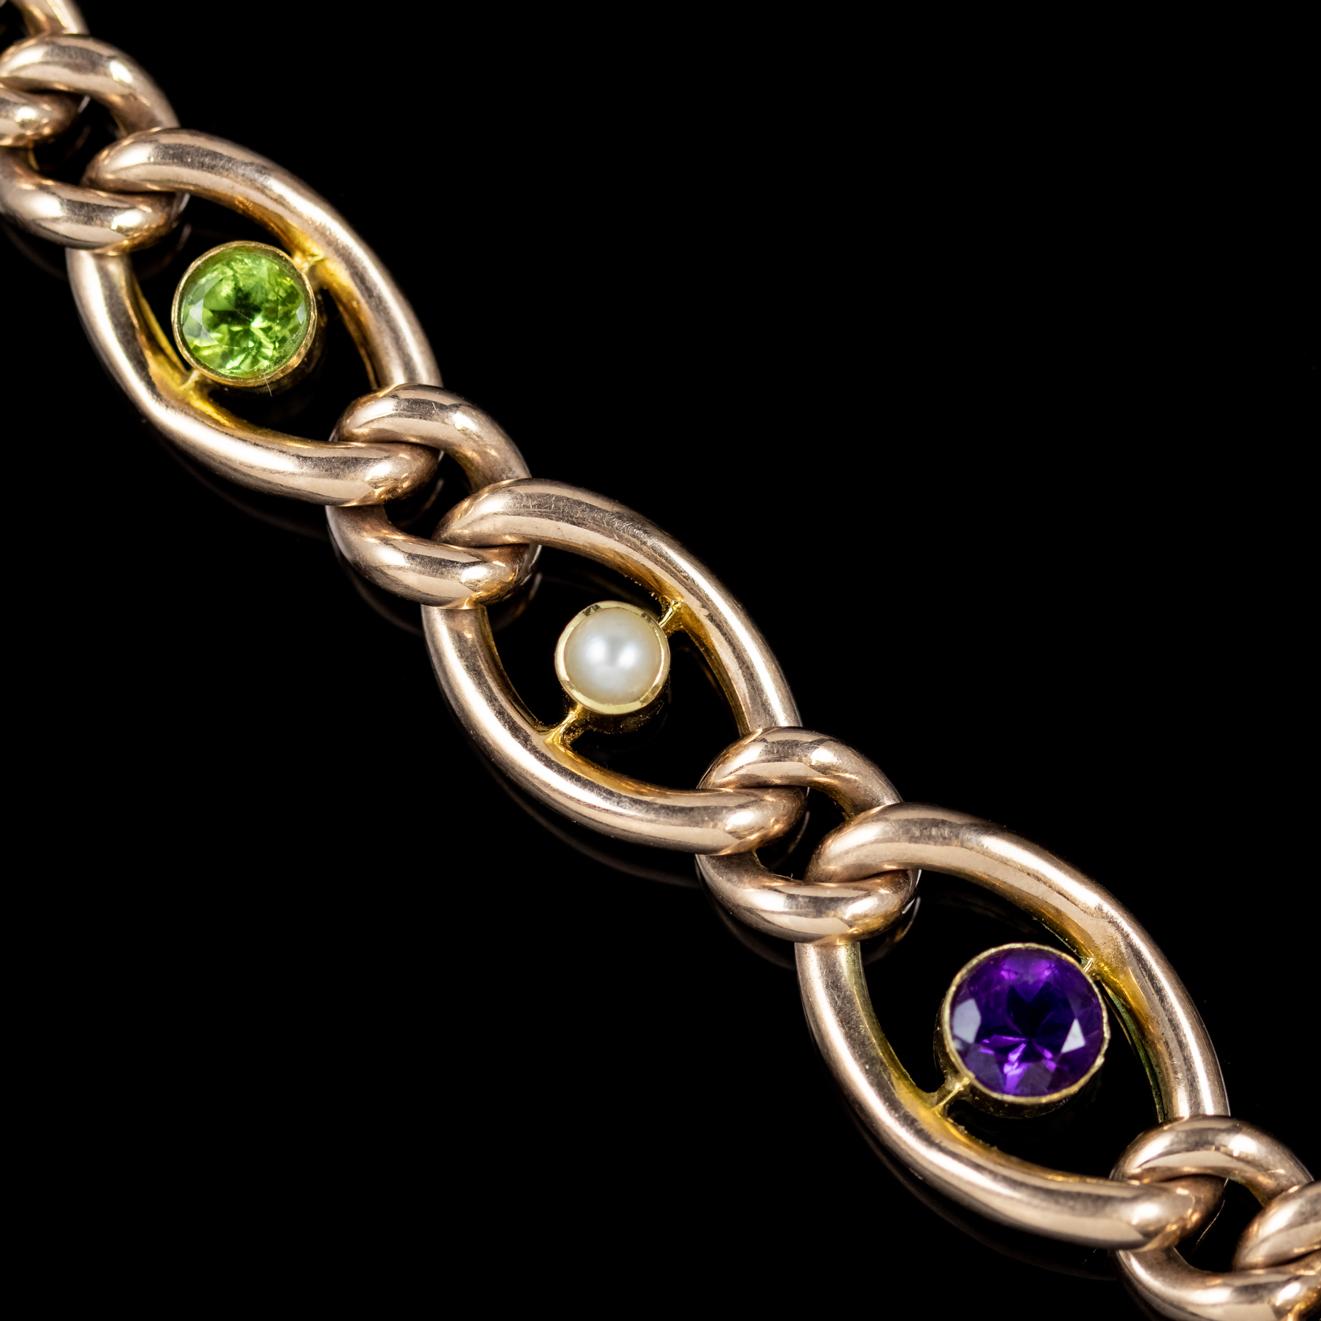 Women's Antique Suffragette Chain Link Bracelet 15 Carat Gold Victorian, circa 1900